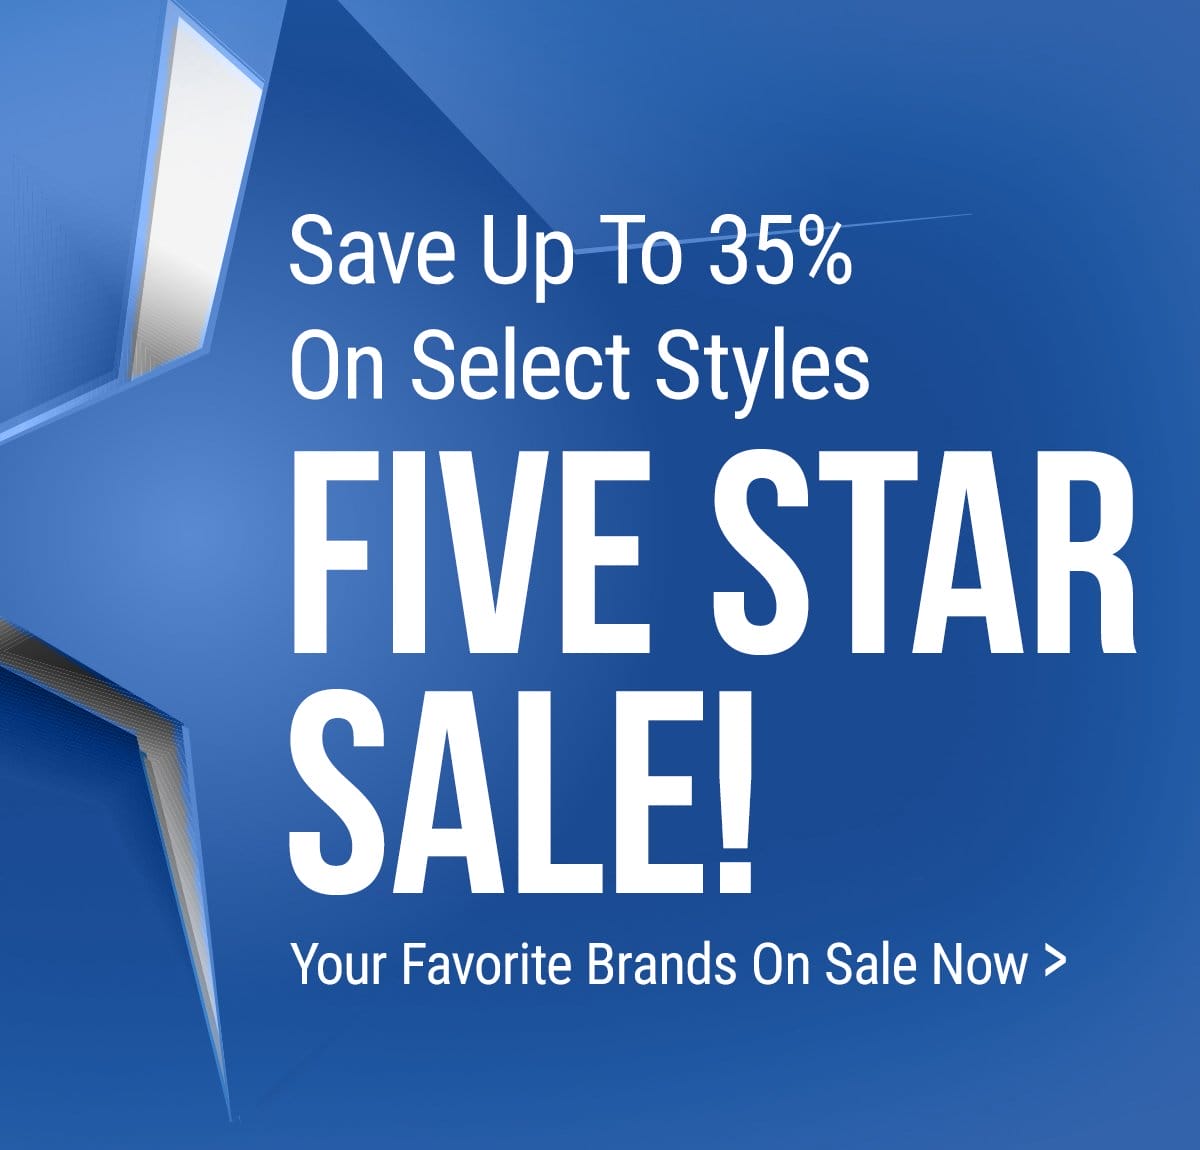 5 Star Sale >